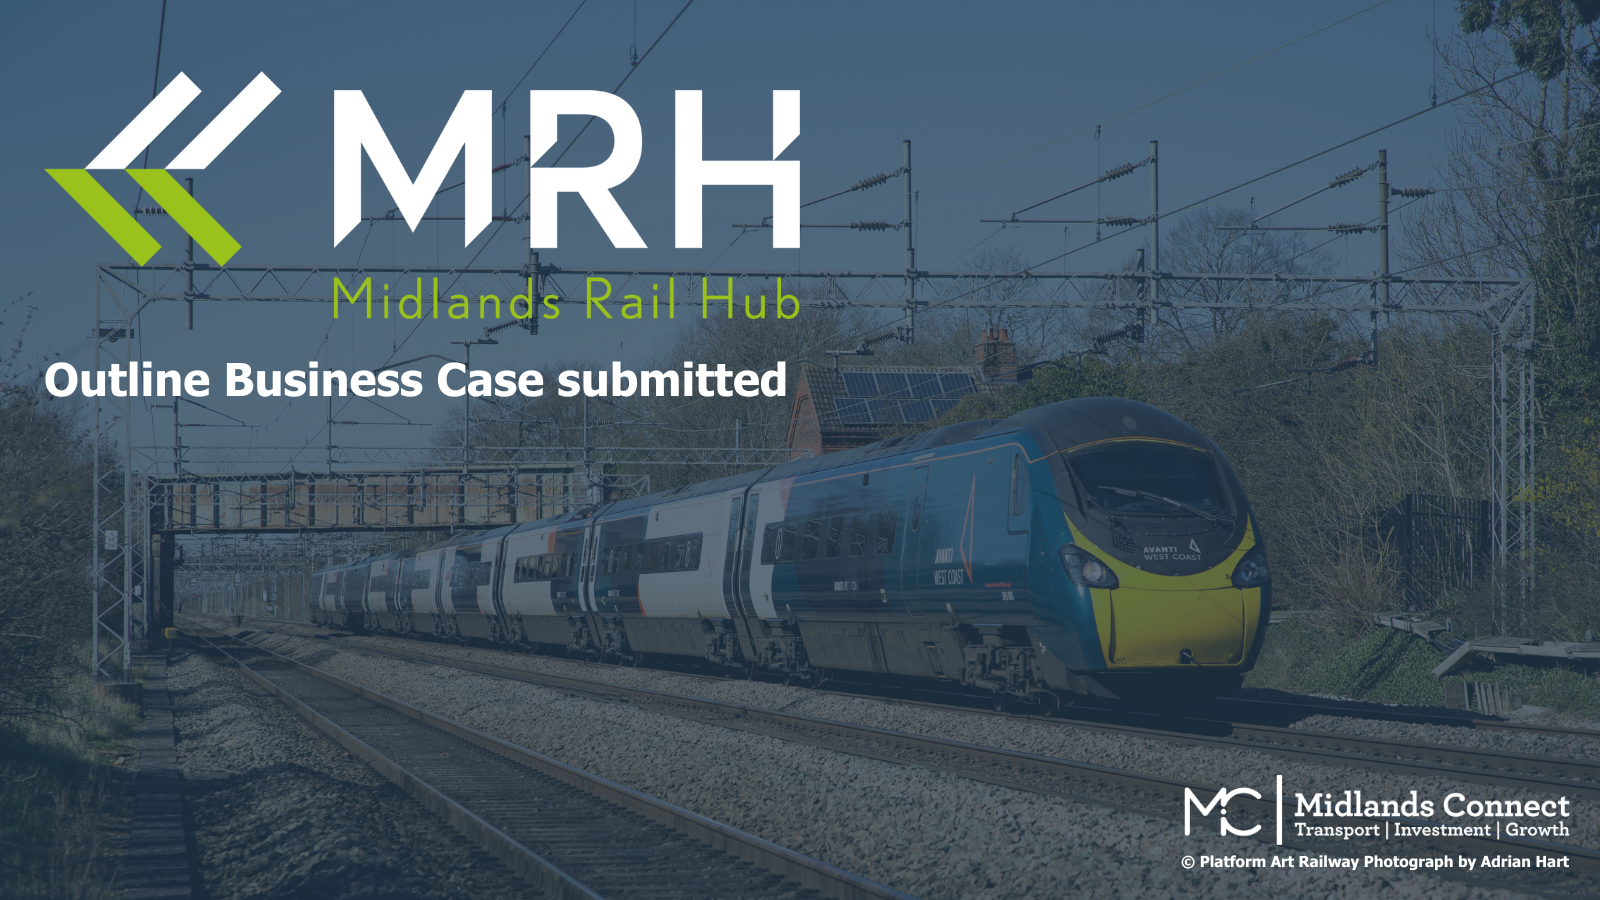 Midlands Rail Hub logo and train image